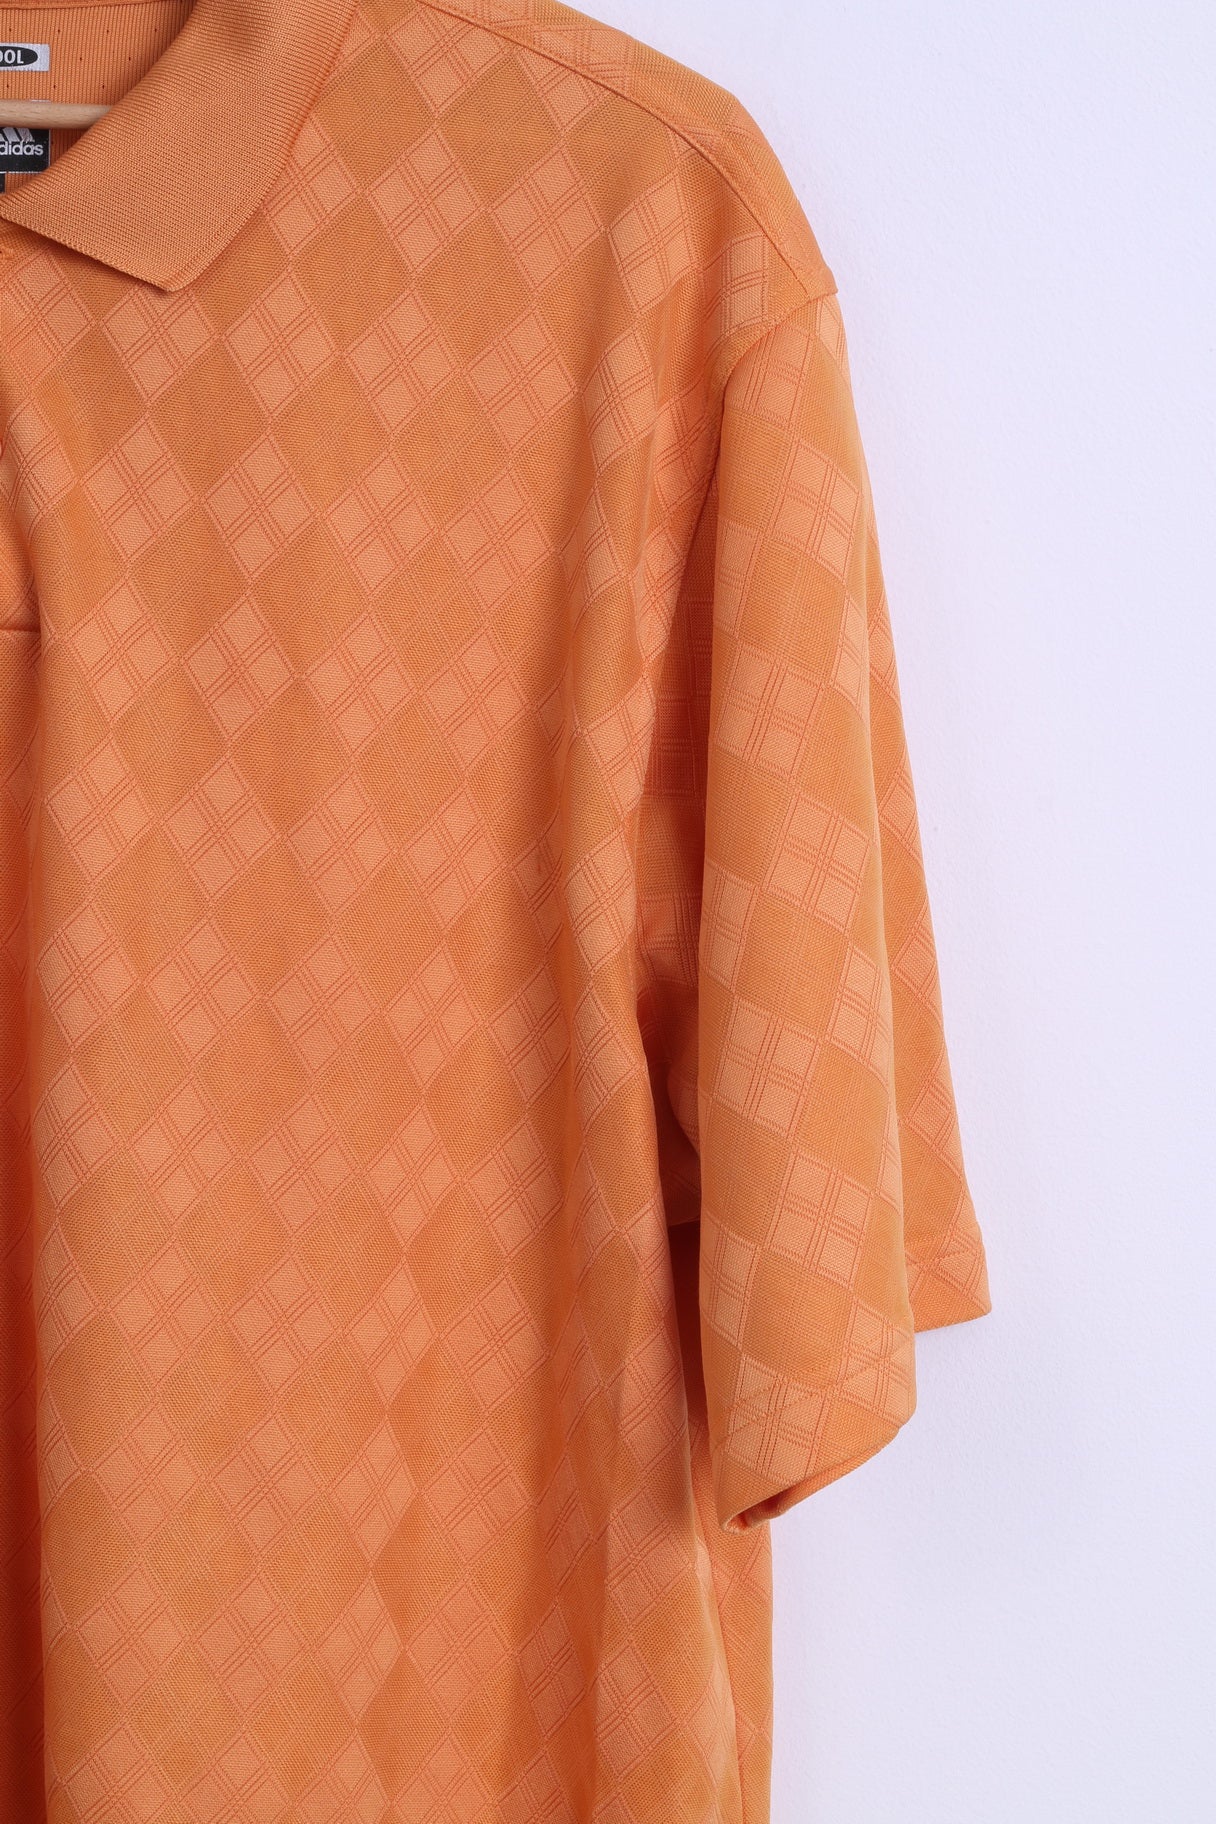 Adidas Mens XL Polo Shirt Shiny Orange Clima Cool Diamond Printed Retro Top